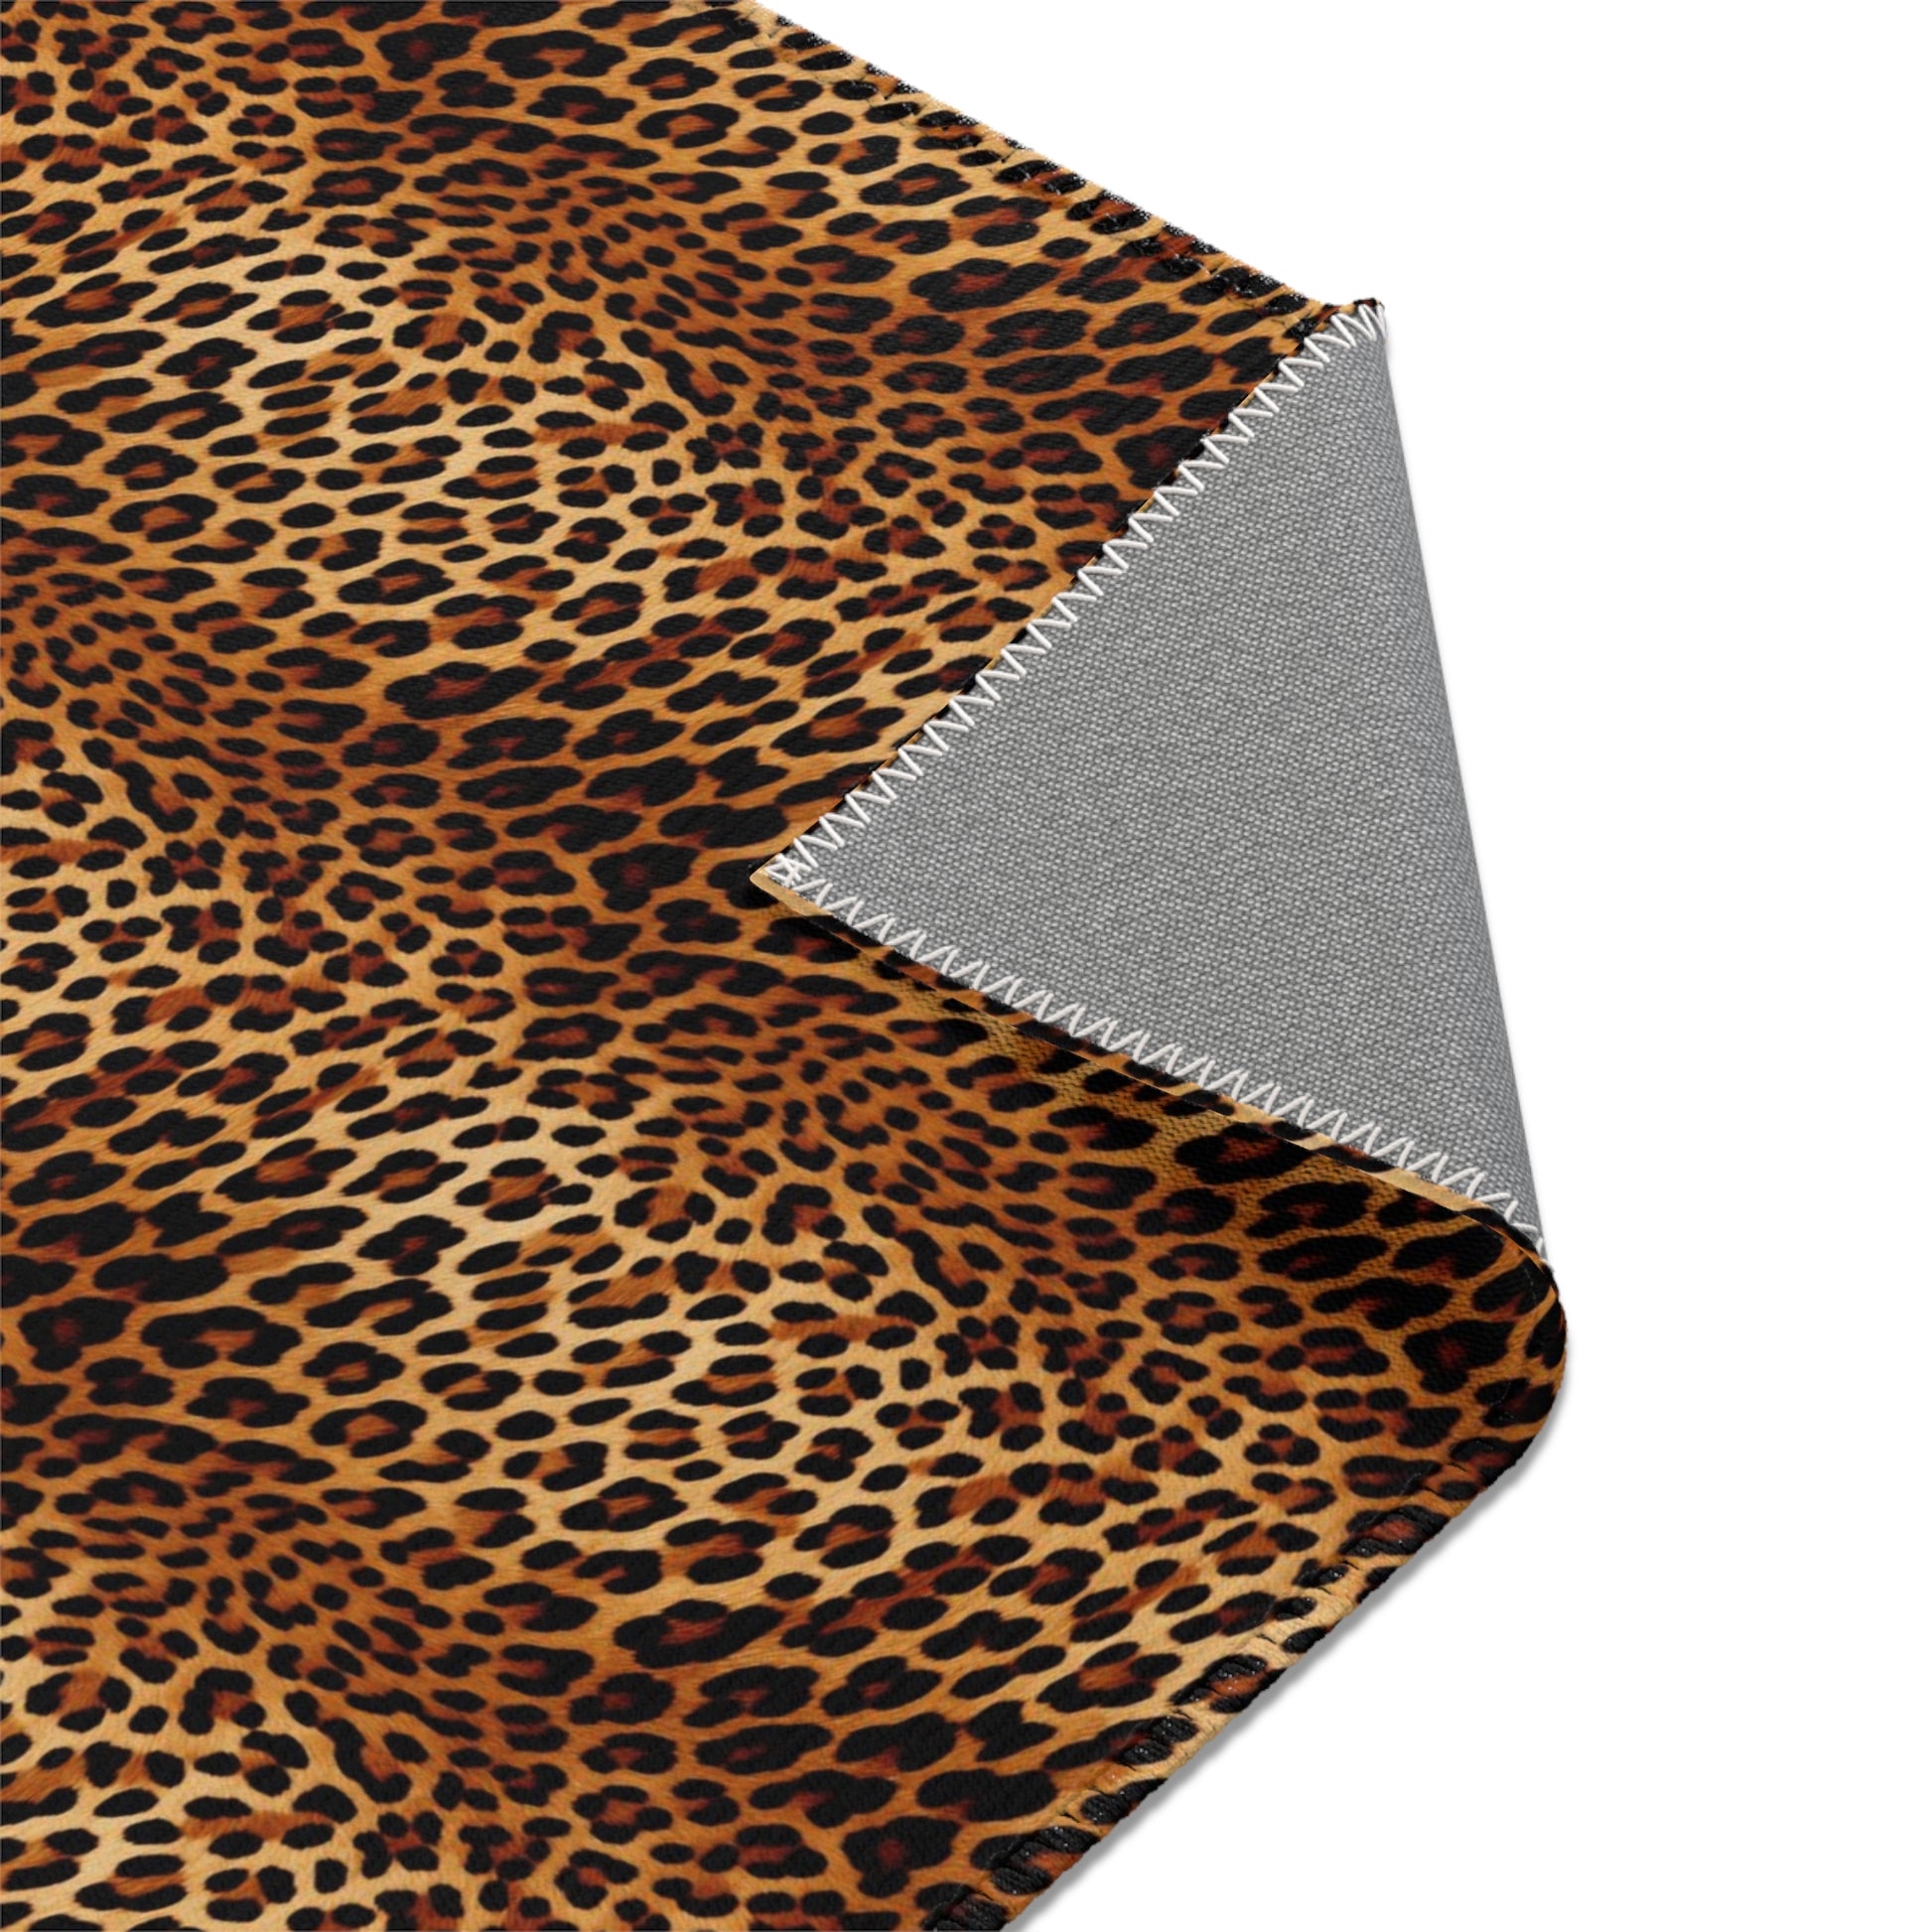 Leopard Print Area Rug Carpet, Cheetah Animal Home Floor Decor Chic 2x3 4x6 3x5 Designer Kids Room Accent Decorative Bedroom Mat Starcove Fashion